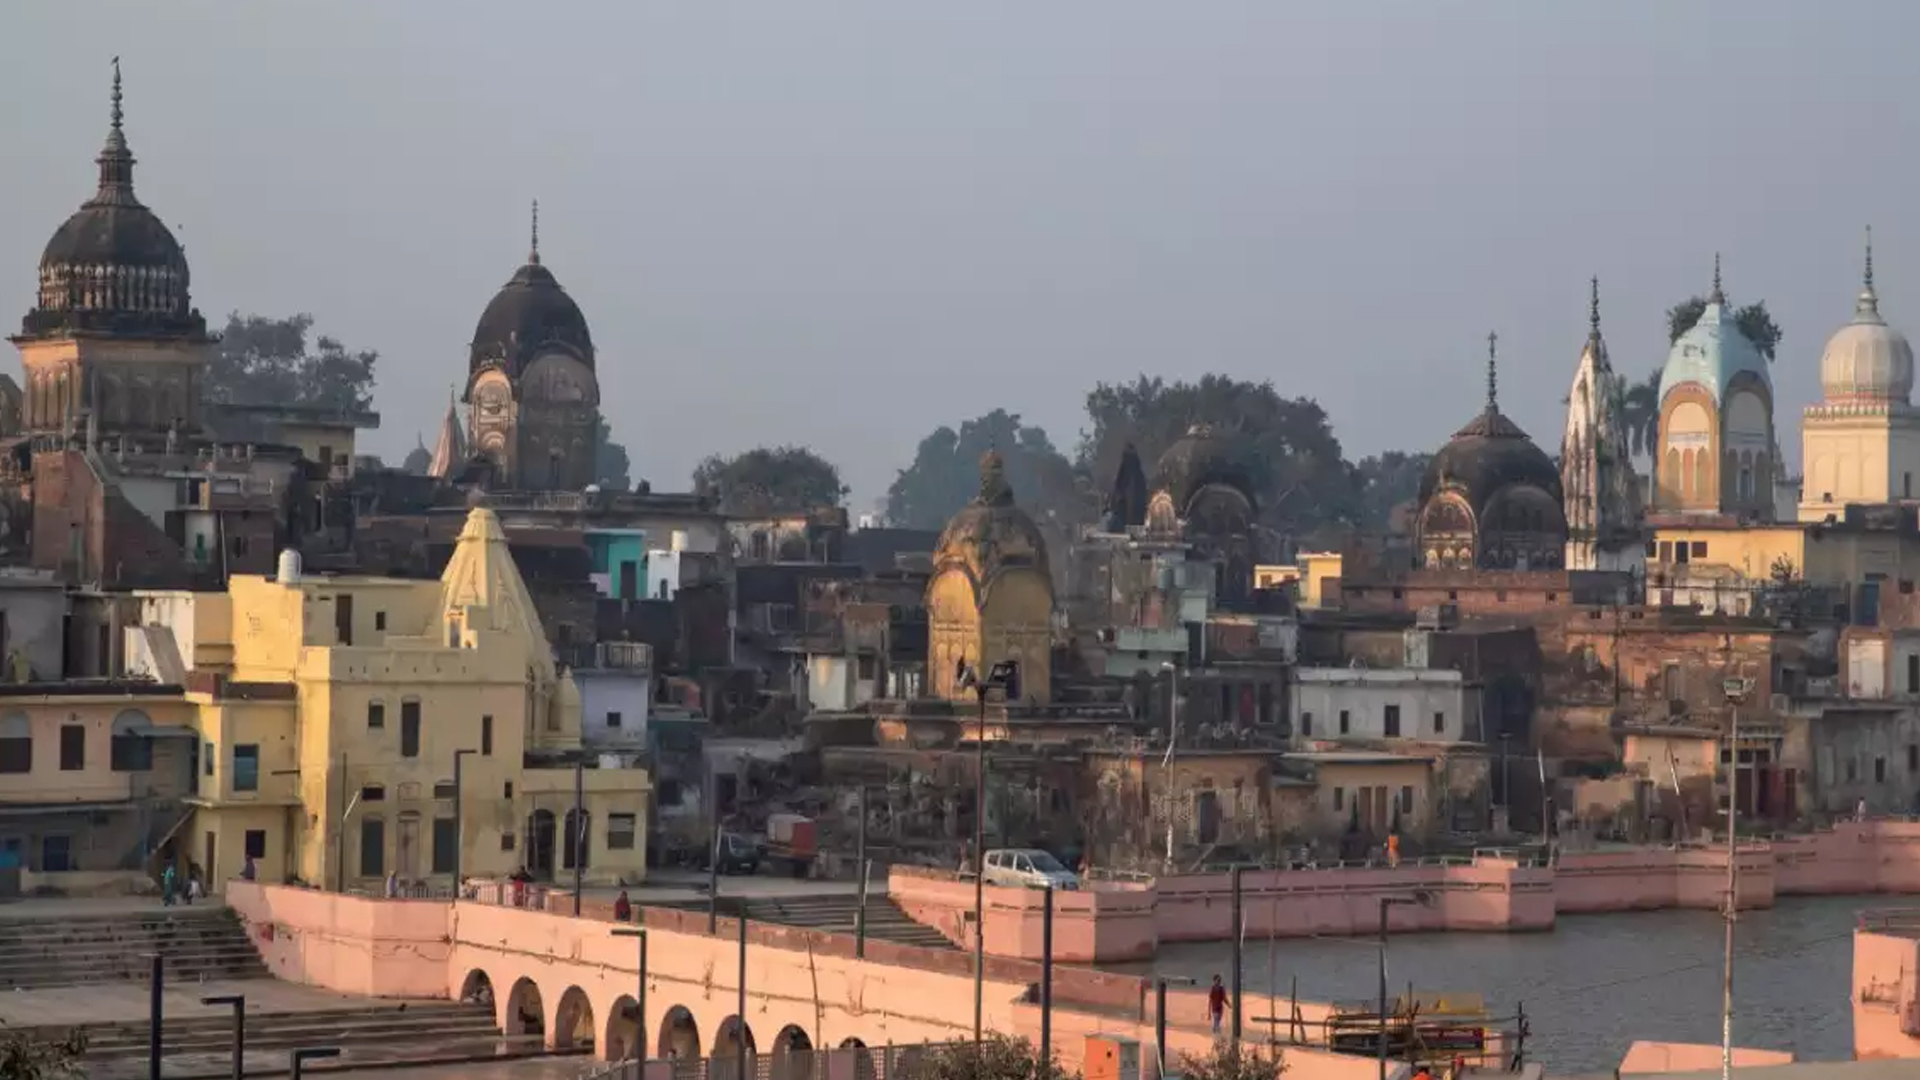 Ayodhya